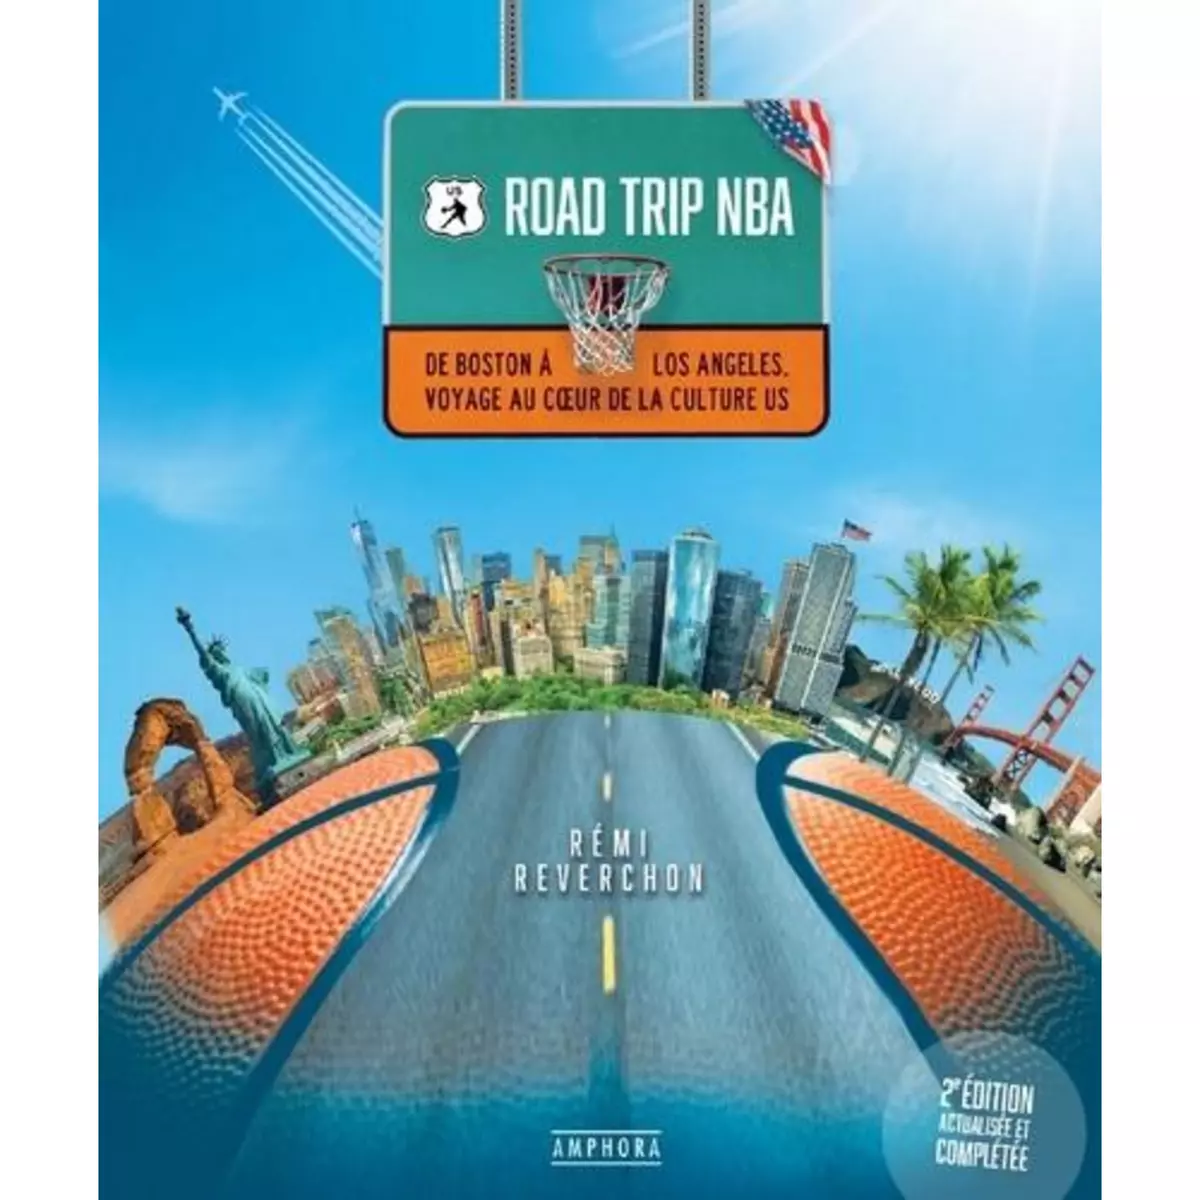  ROAD TRIP NBA. DE BOSTON A LOS ANGELES, VOYAGE AU COEUR DE LA CULTURE US, Reverchon Rémi